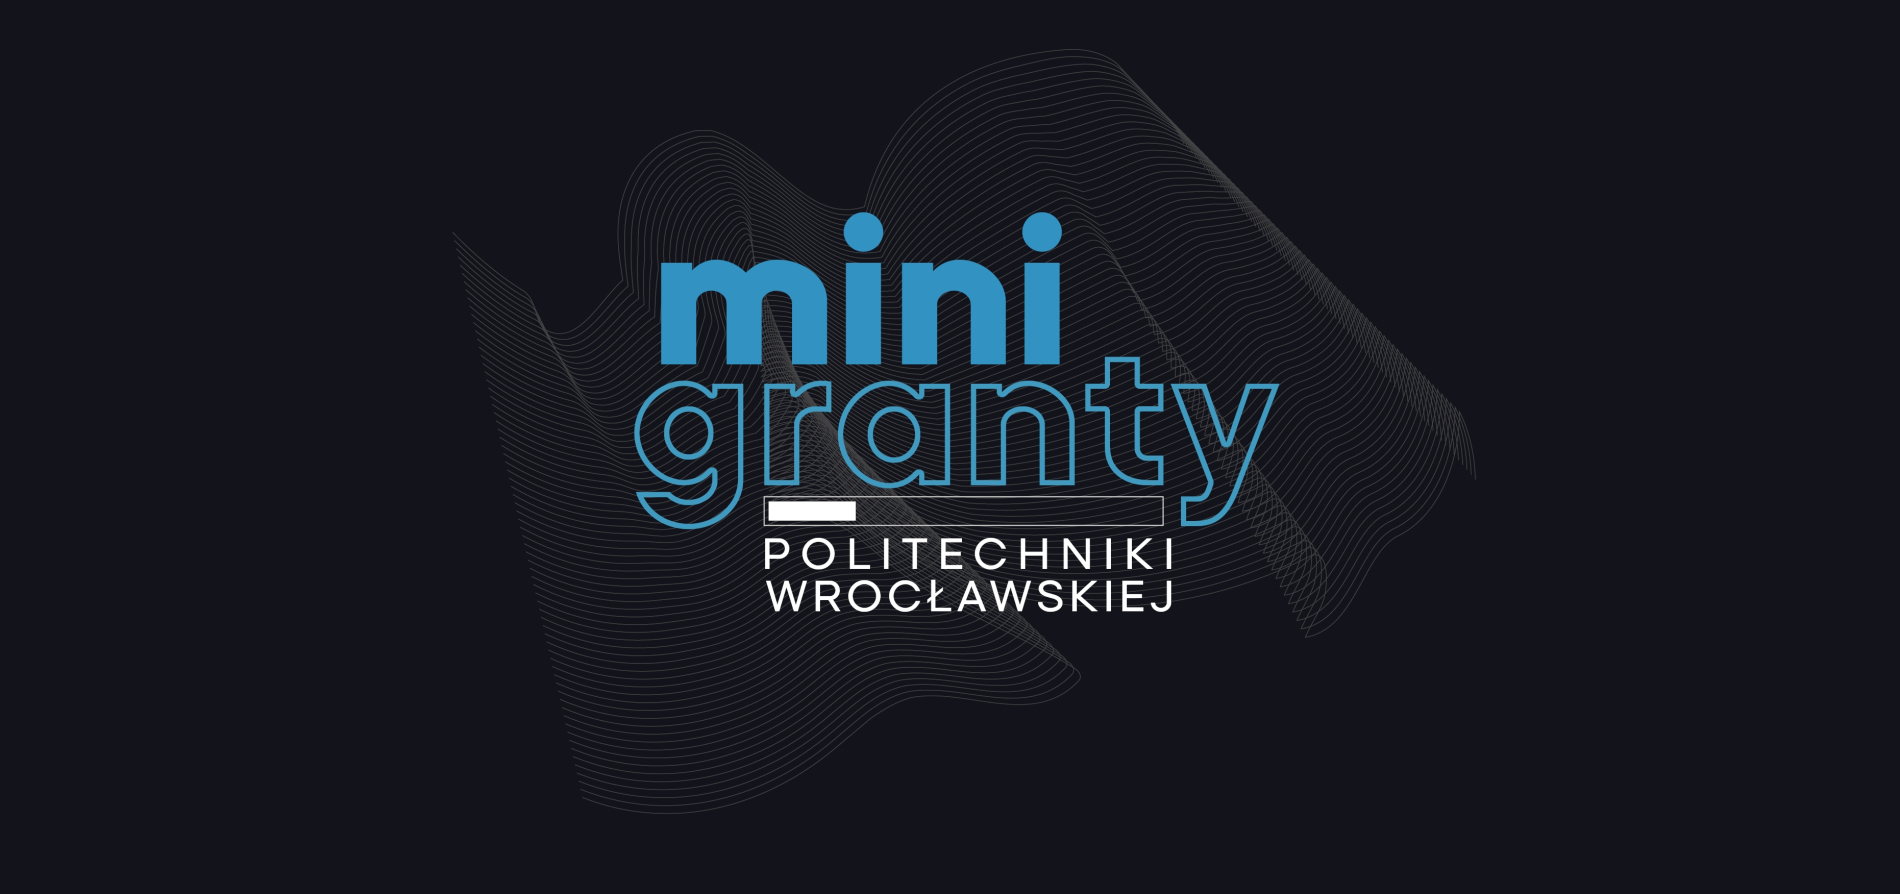 minigranty-logo.jpg